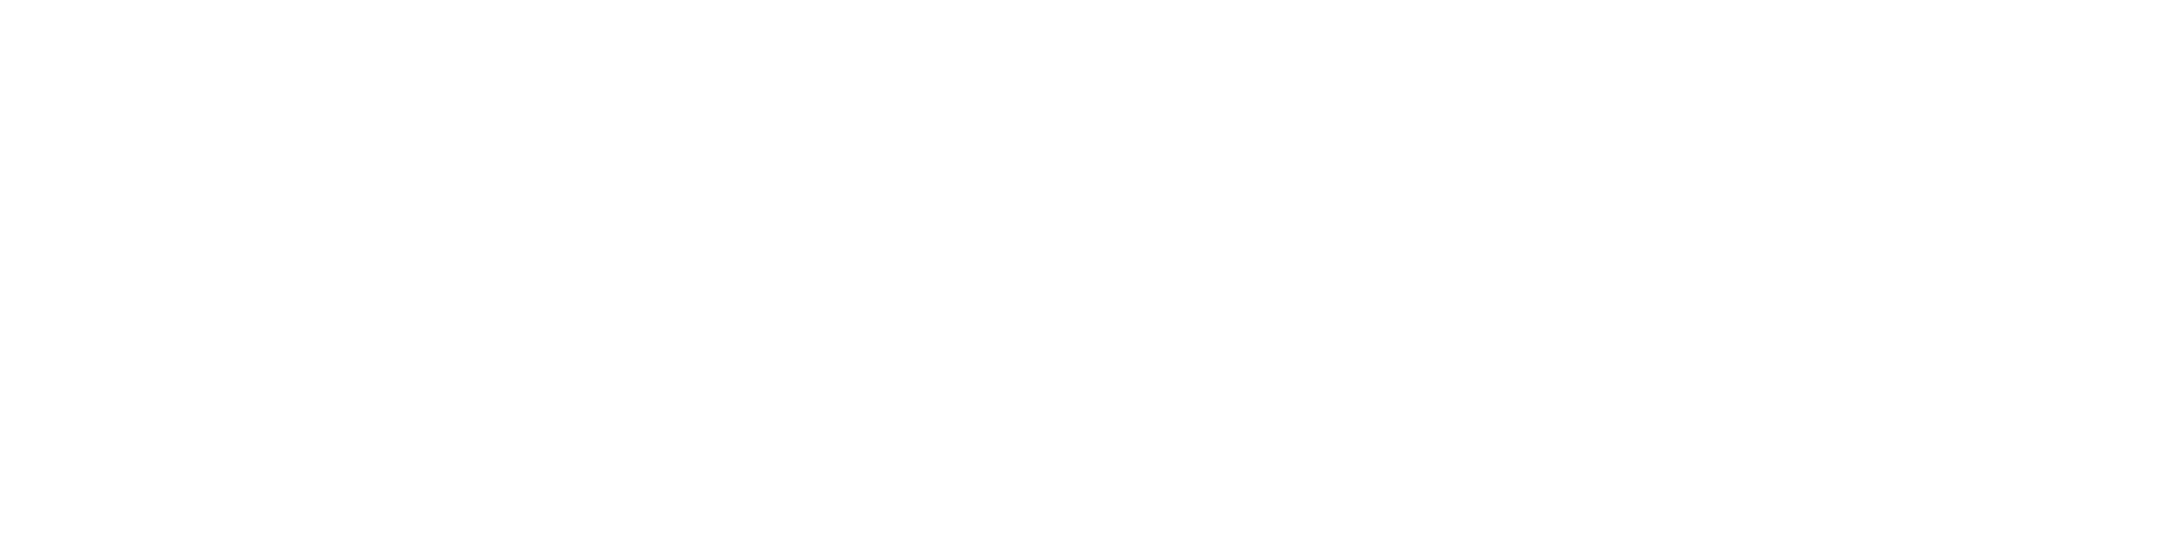 The Doris Duke Foundation